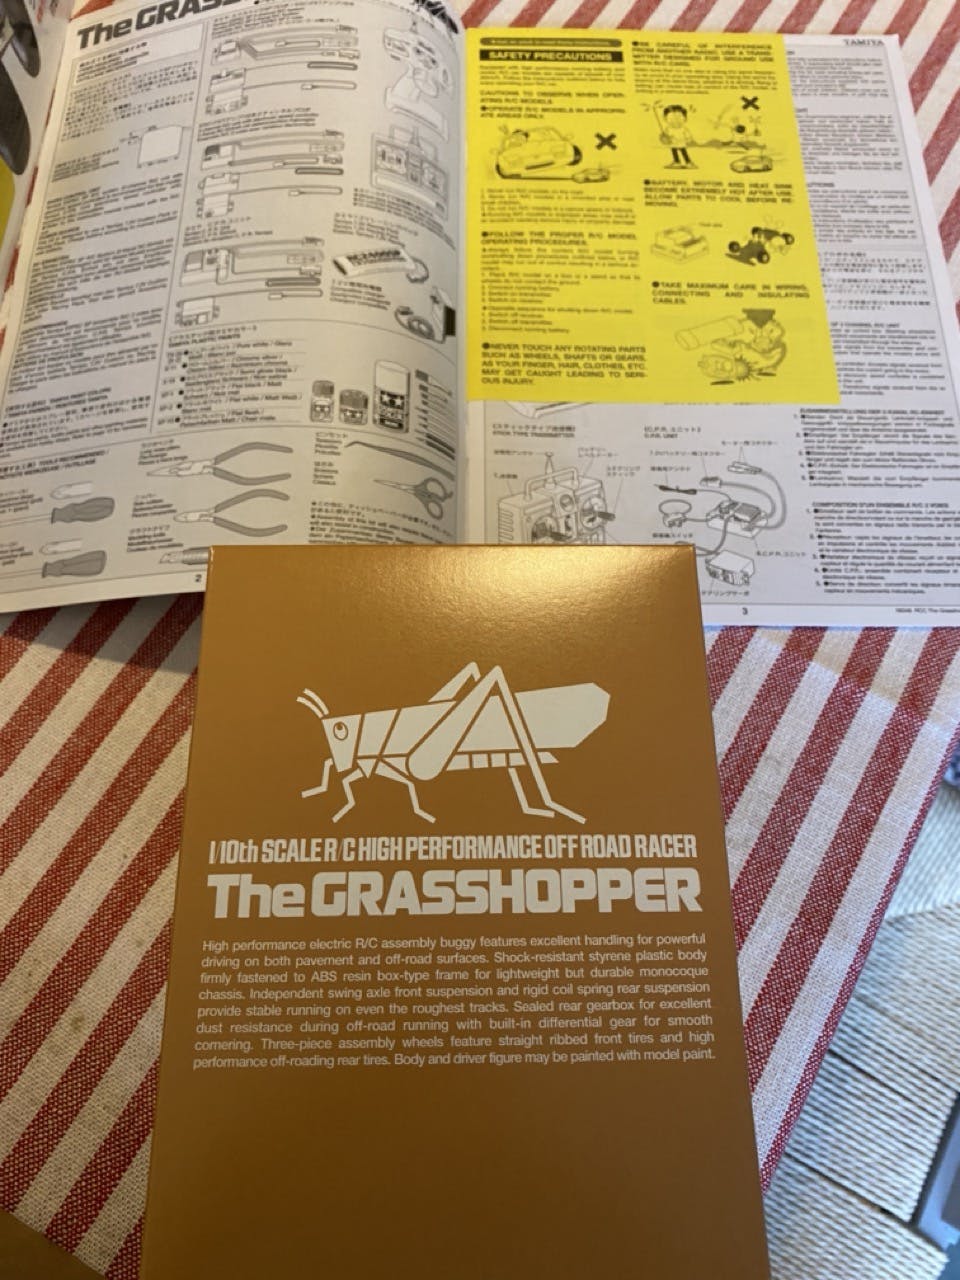 Tamiya Grasshopper Model RC car notes